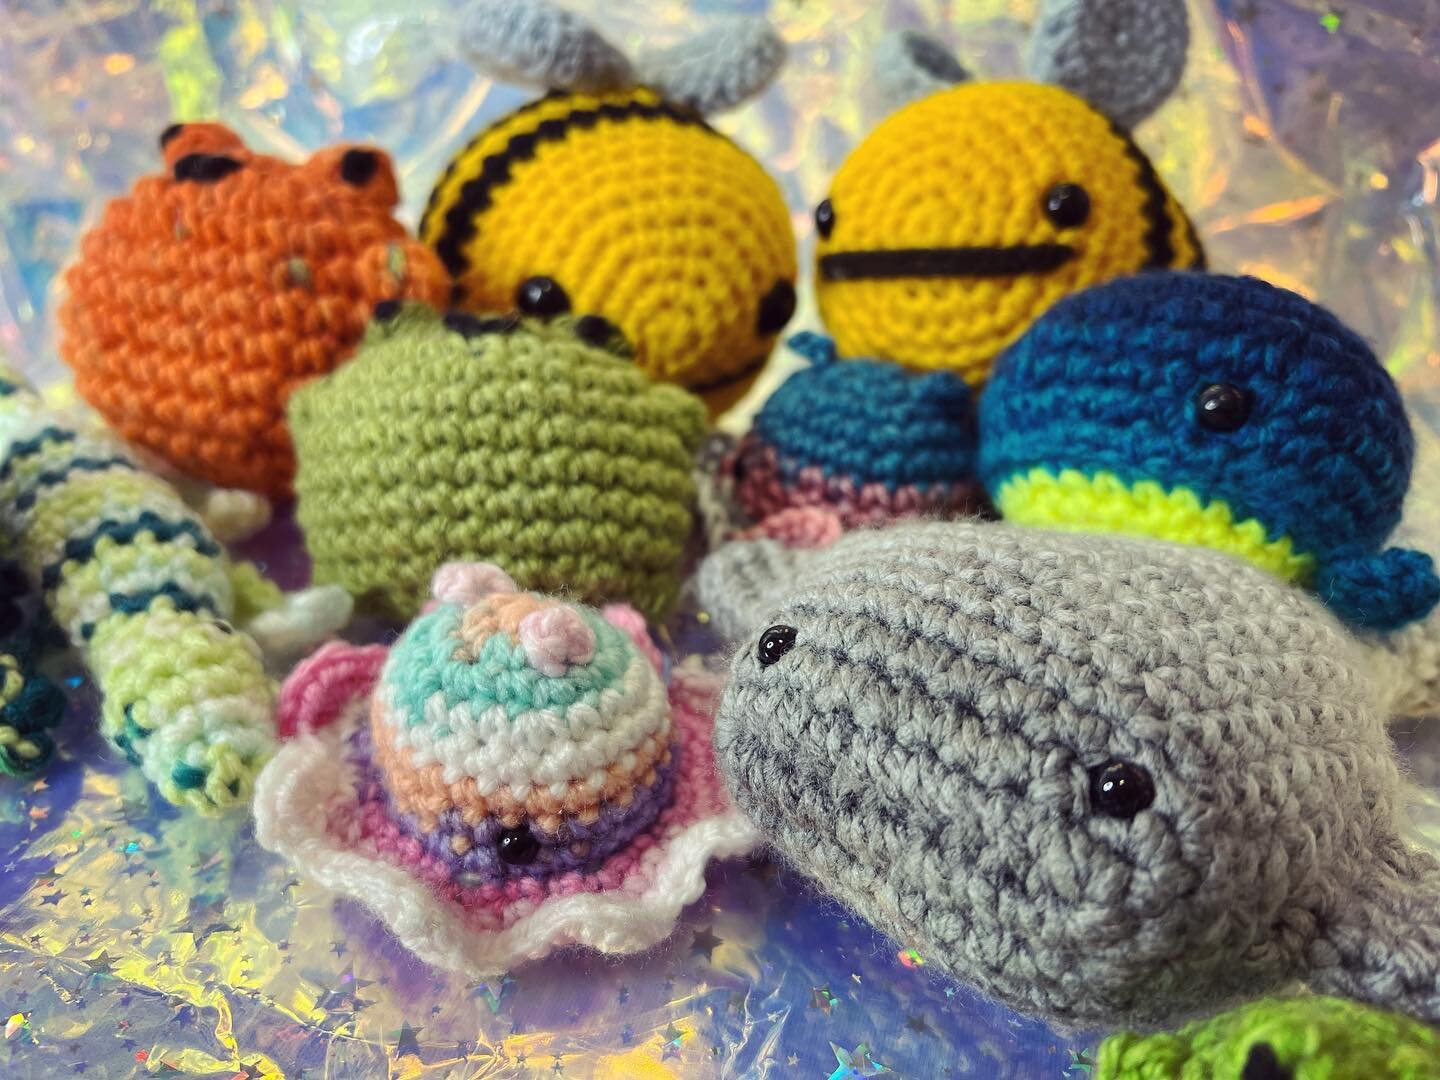 Another group of crochet friends that will be joining me at my next few markets. 

&hellip;&hellip;&hellip;&hellip;&hellip;&hellip;&hellip;.

#edensprout #crochet #crochetersofinstagram #crochetart #handmade #yyjarts #crochetfriend #bee #dumbooctopus